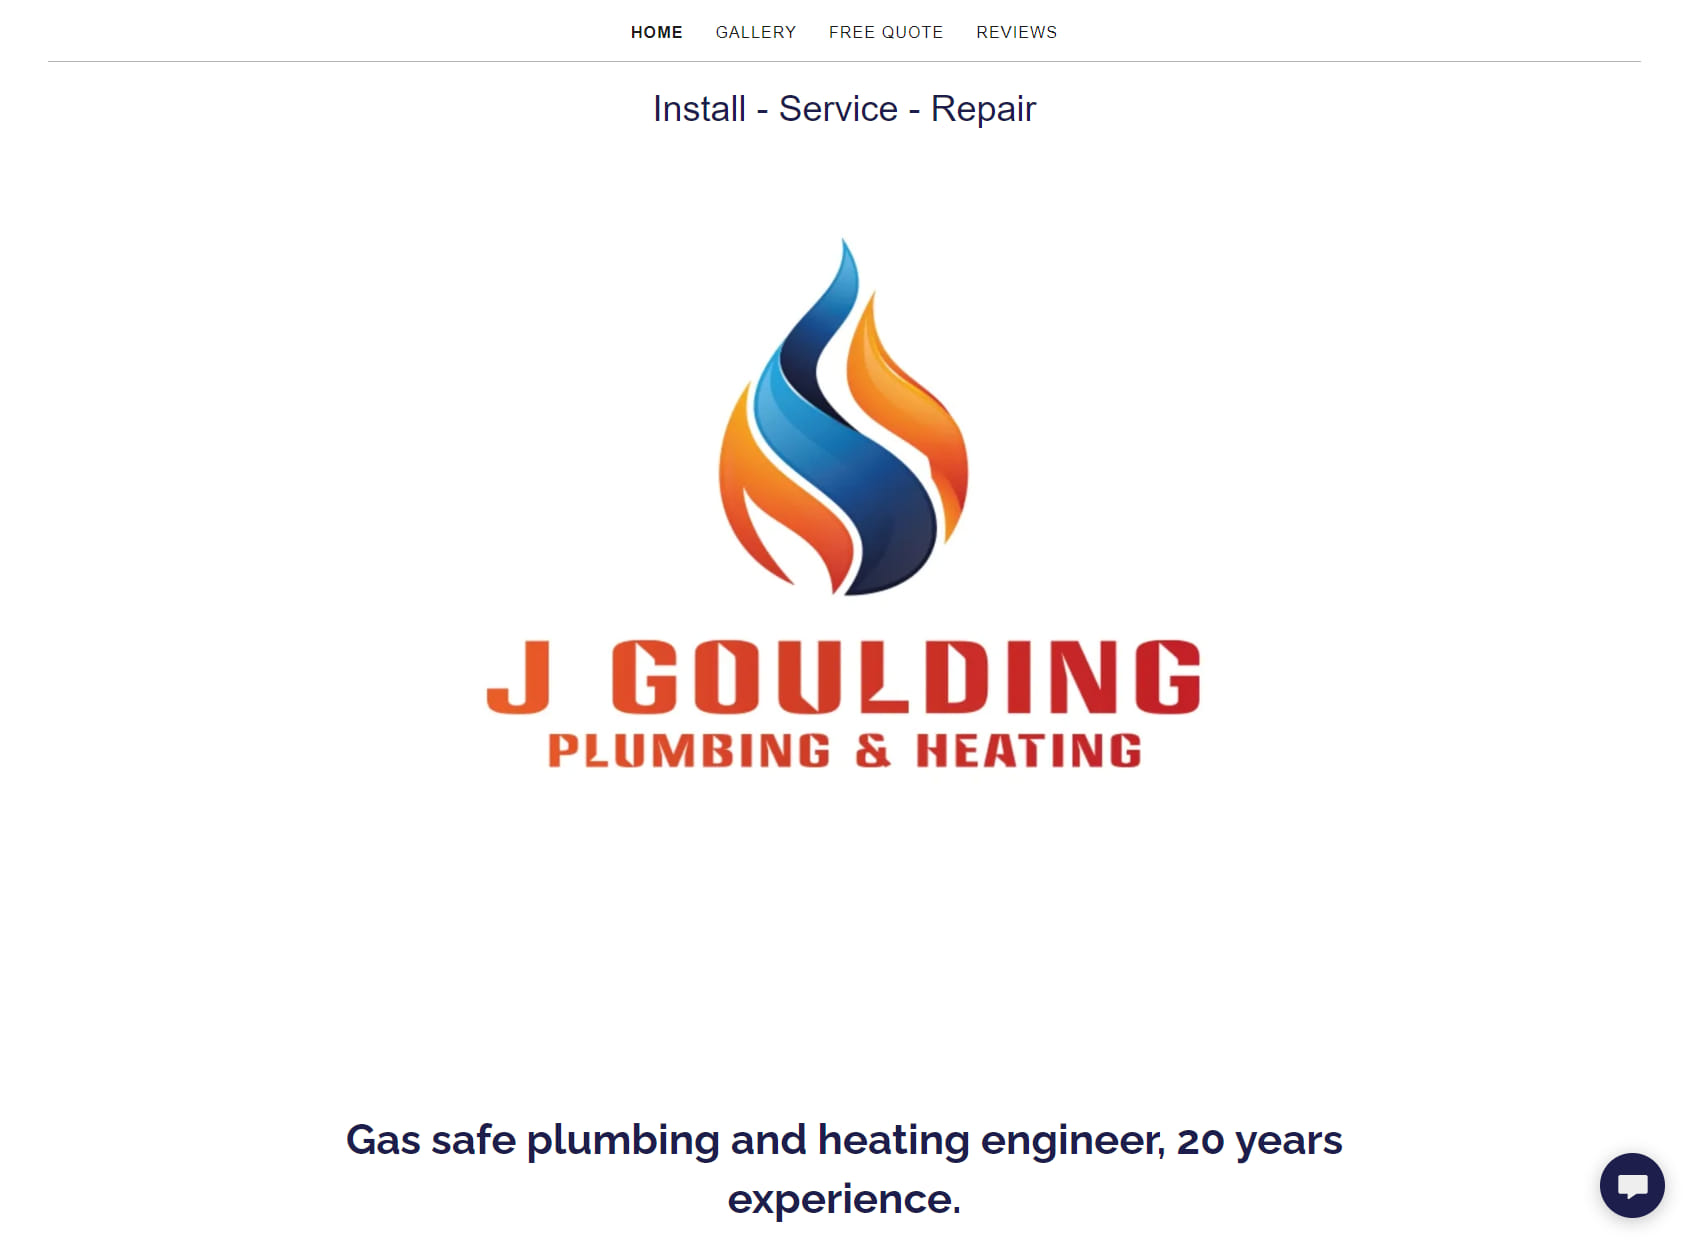 J Goulding Plumbing and Heating